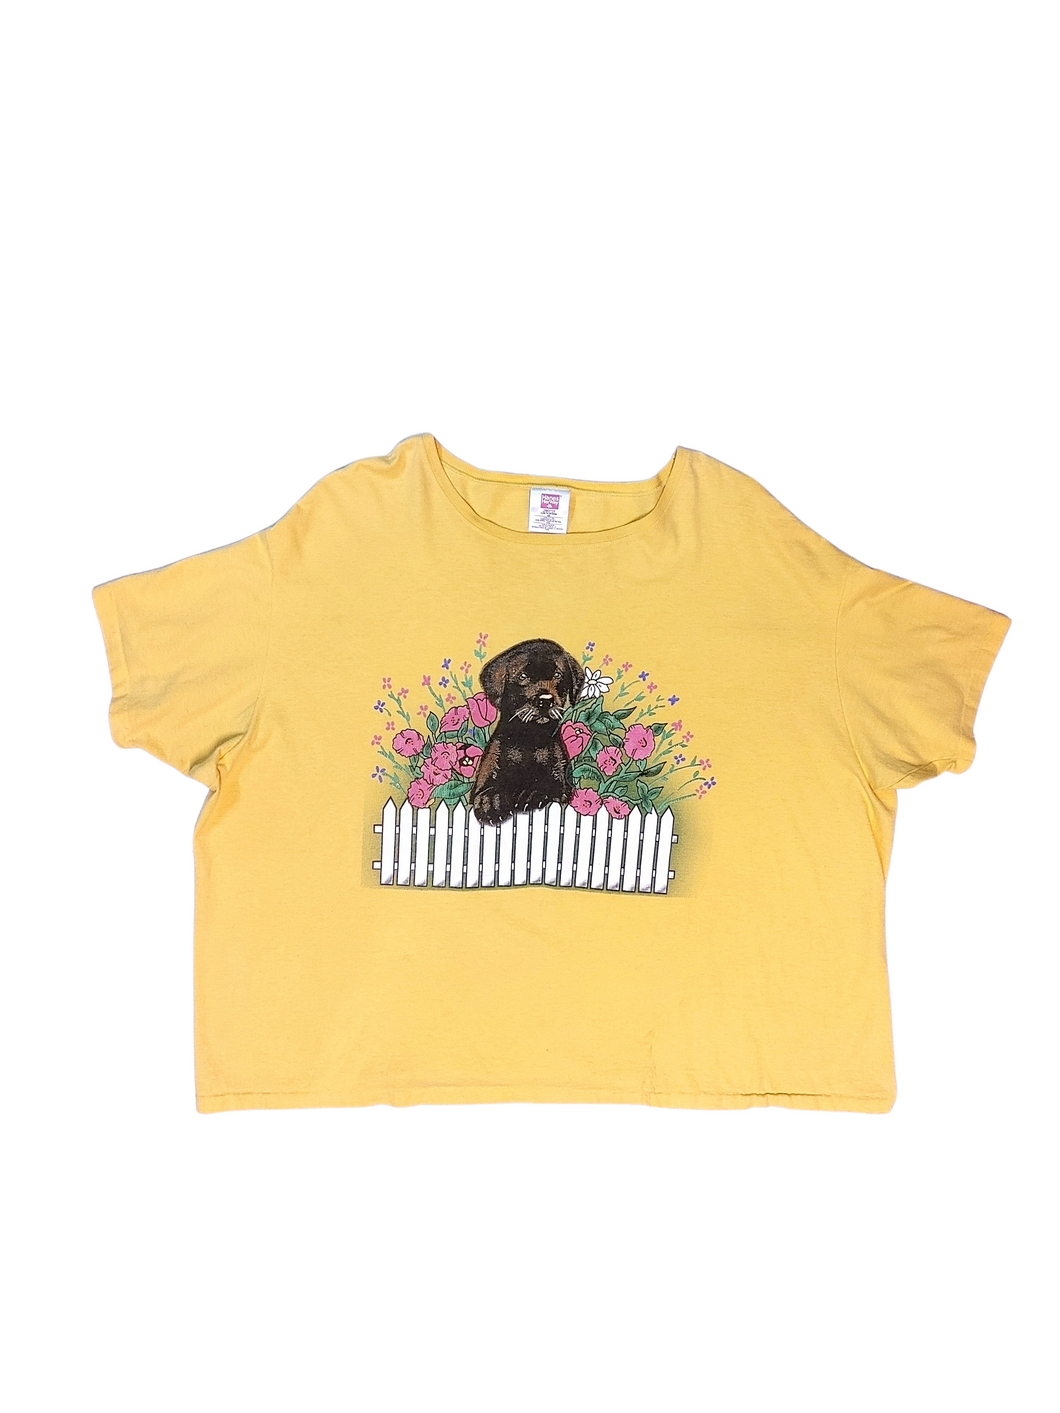 80s Adorable Puppy T-Shirt - Size 3XL